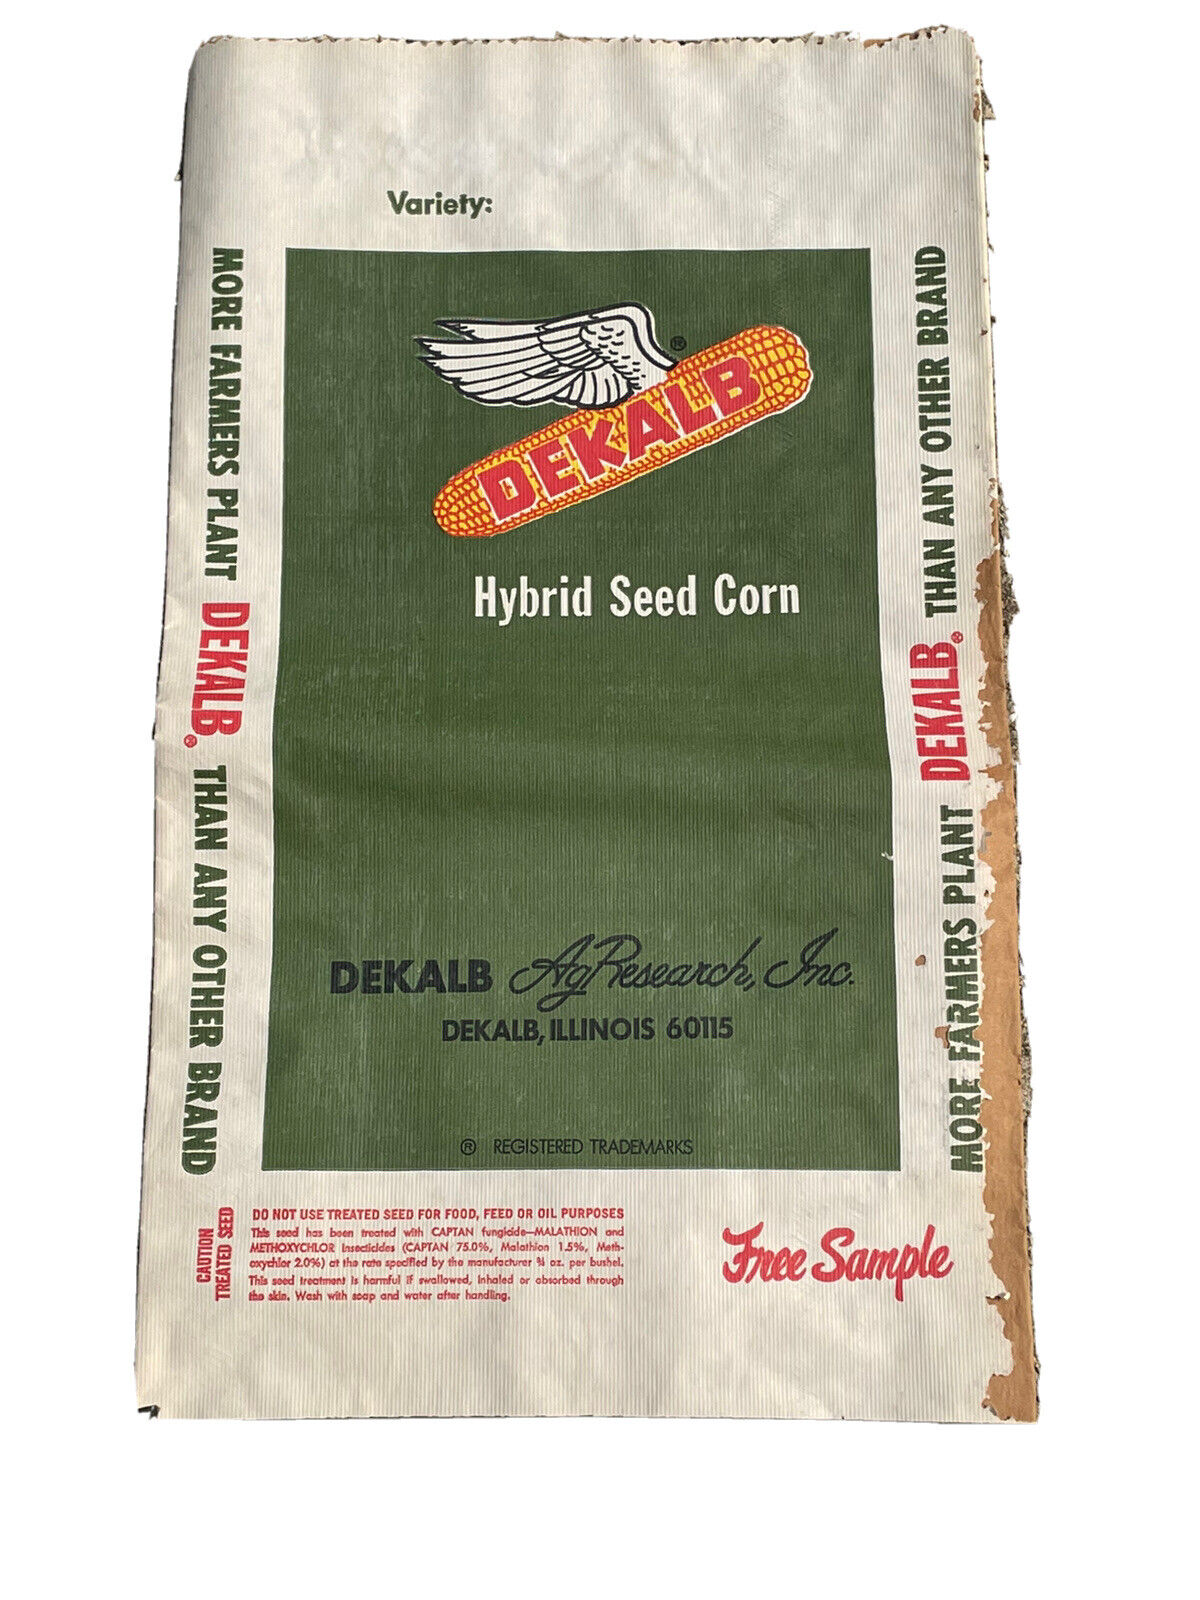 VTG DeKalb hybrid Seed Corn Sack DeKalb Ag Research, Inc Free Sample Paper Bag